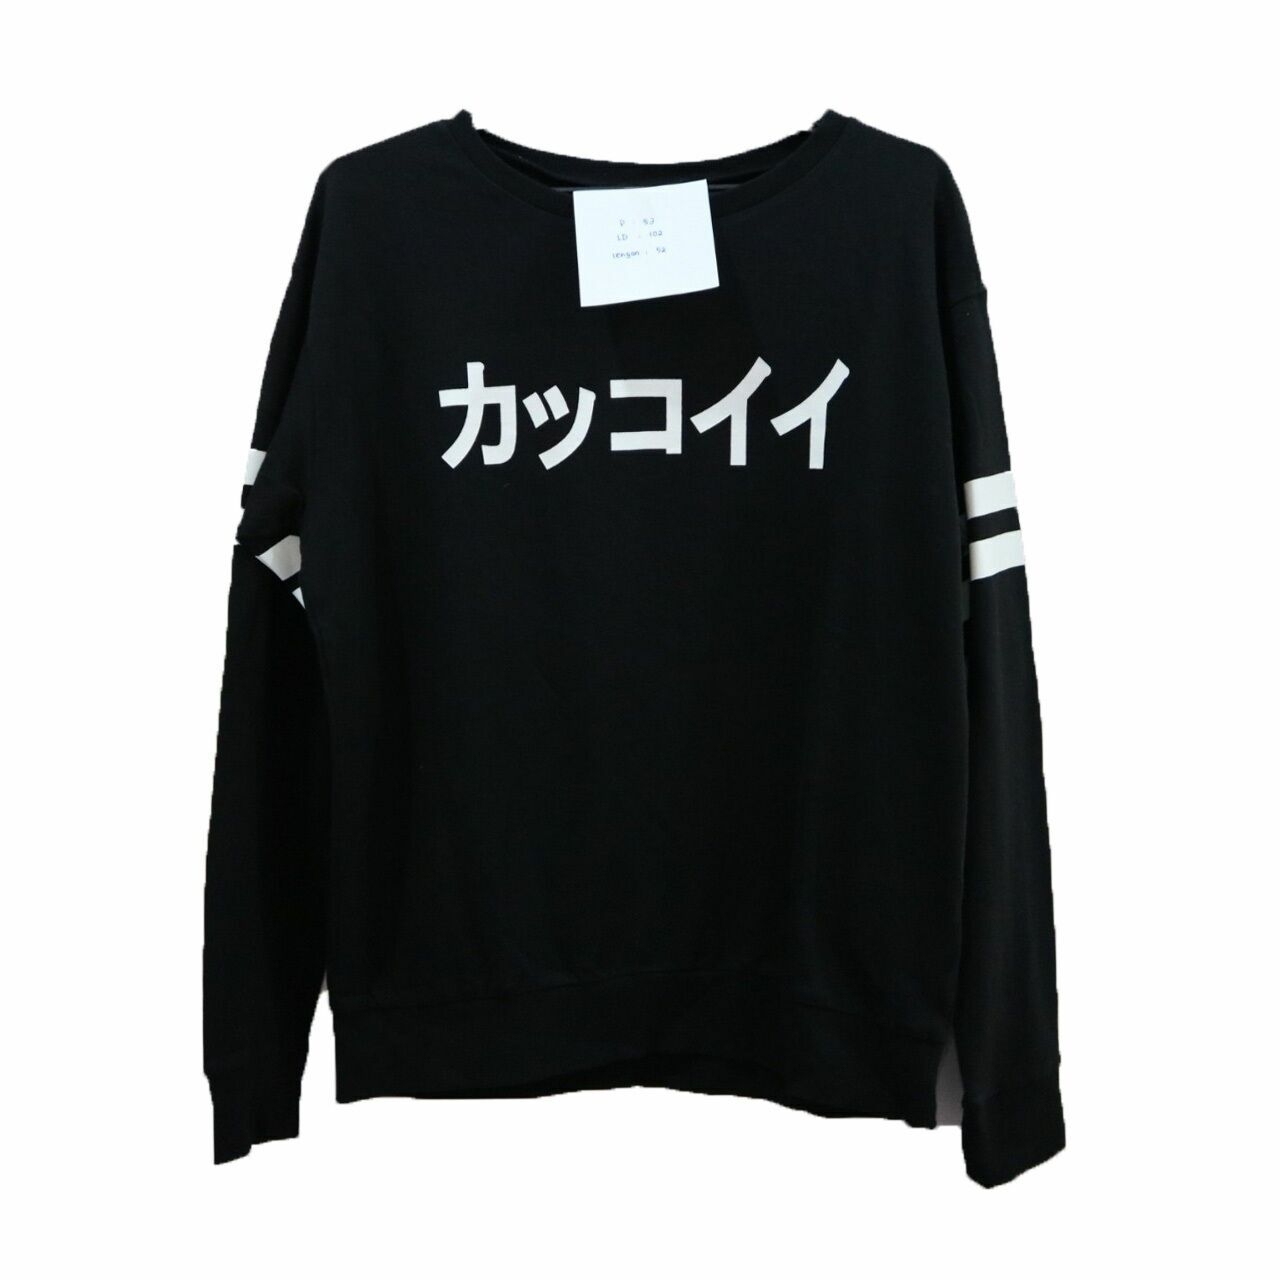 H&m Black Sweater